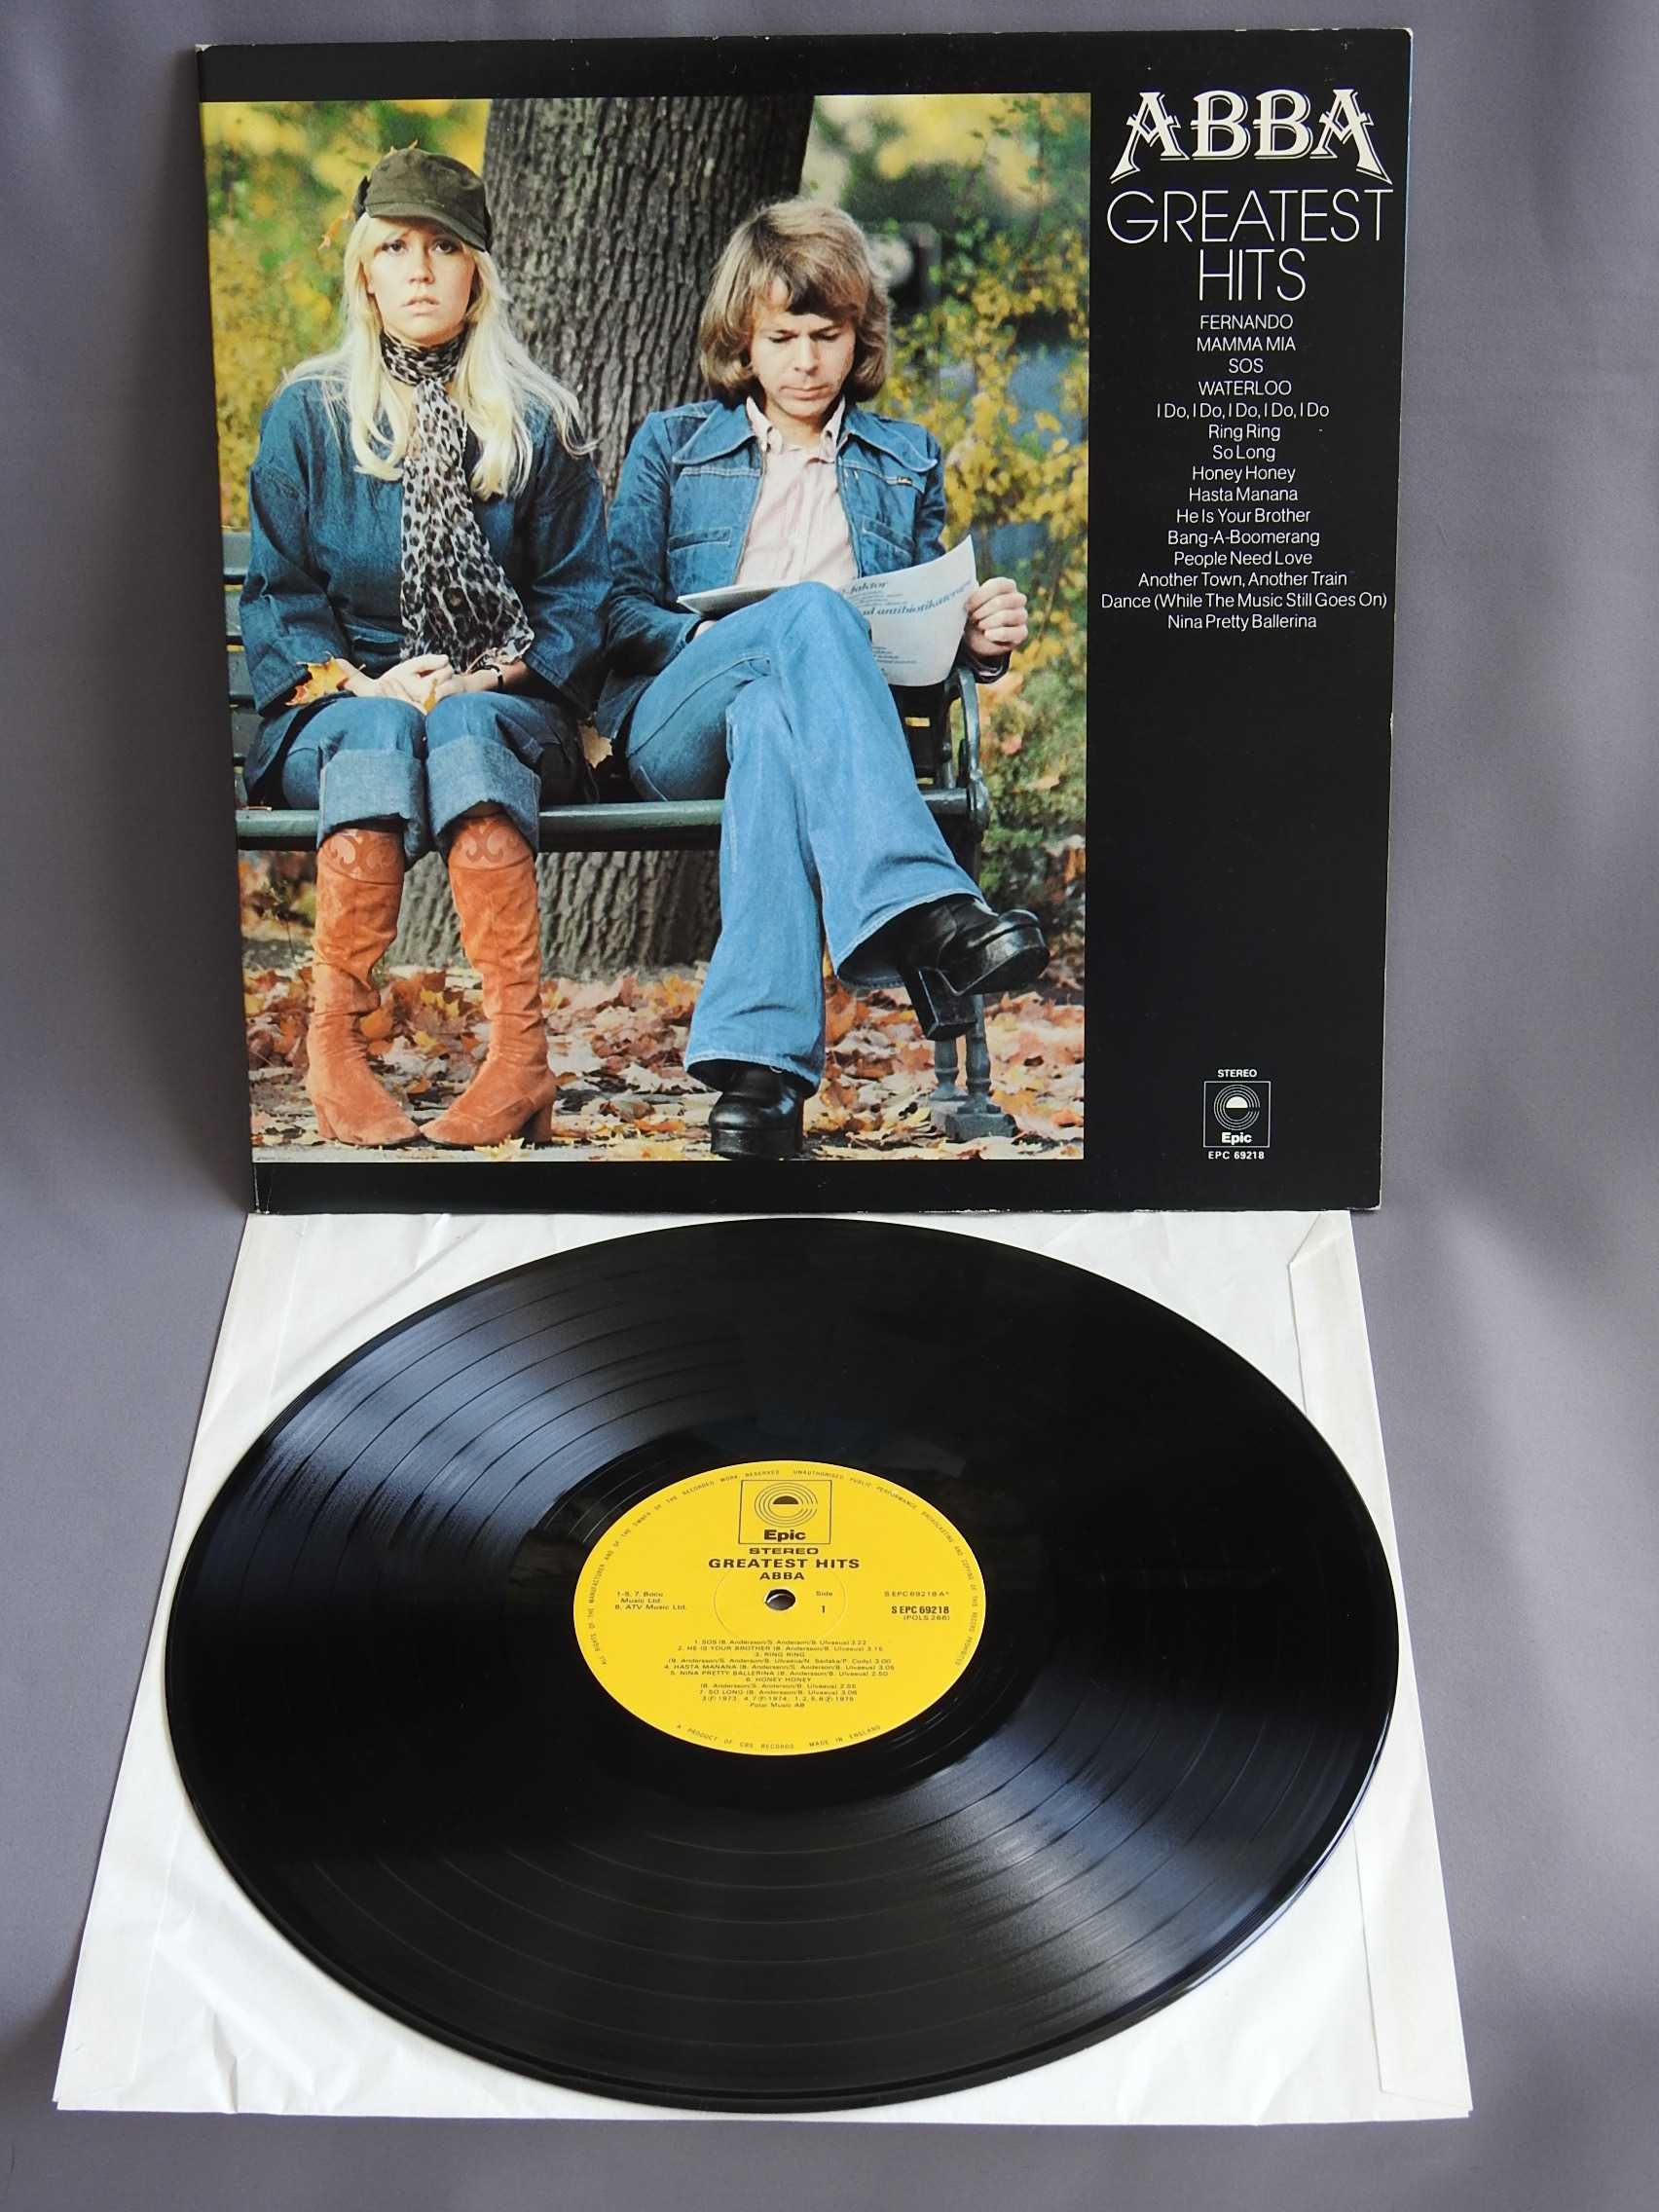 ABBA ‎Greatest Hits LP 1976 UK Epic пластинка Британия NM 1press ориги